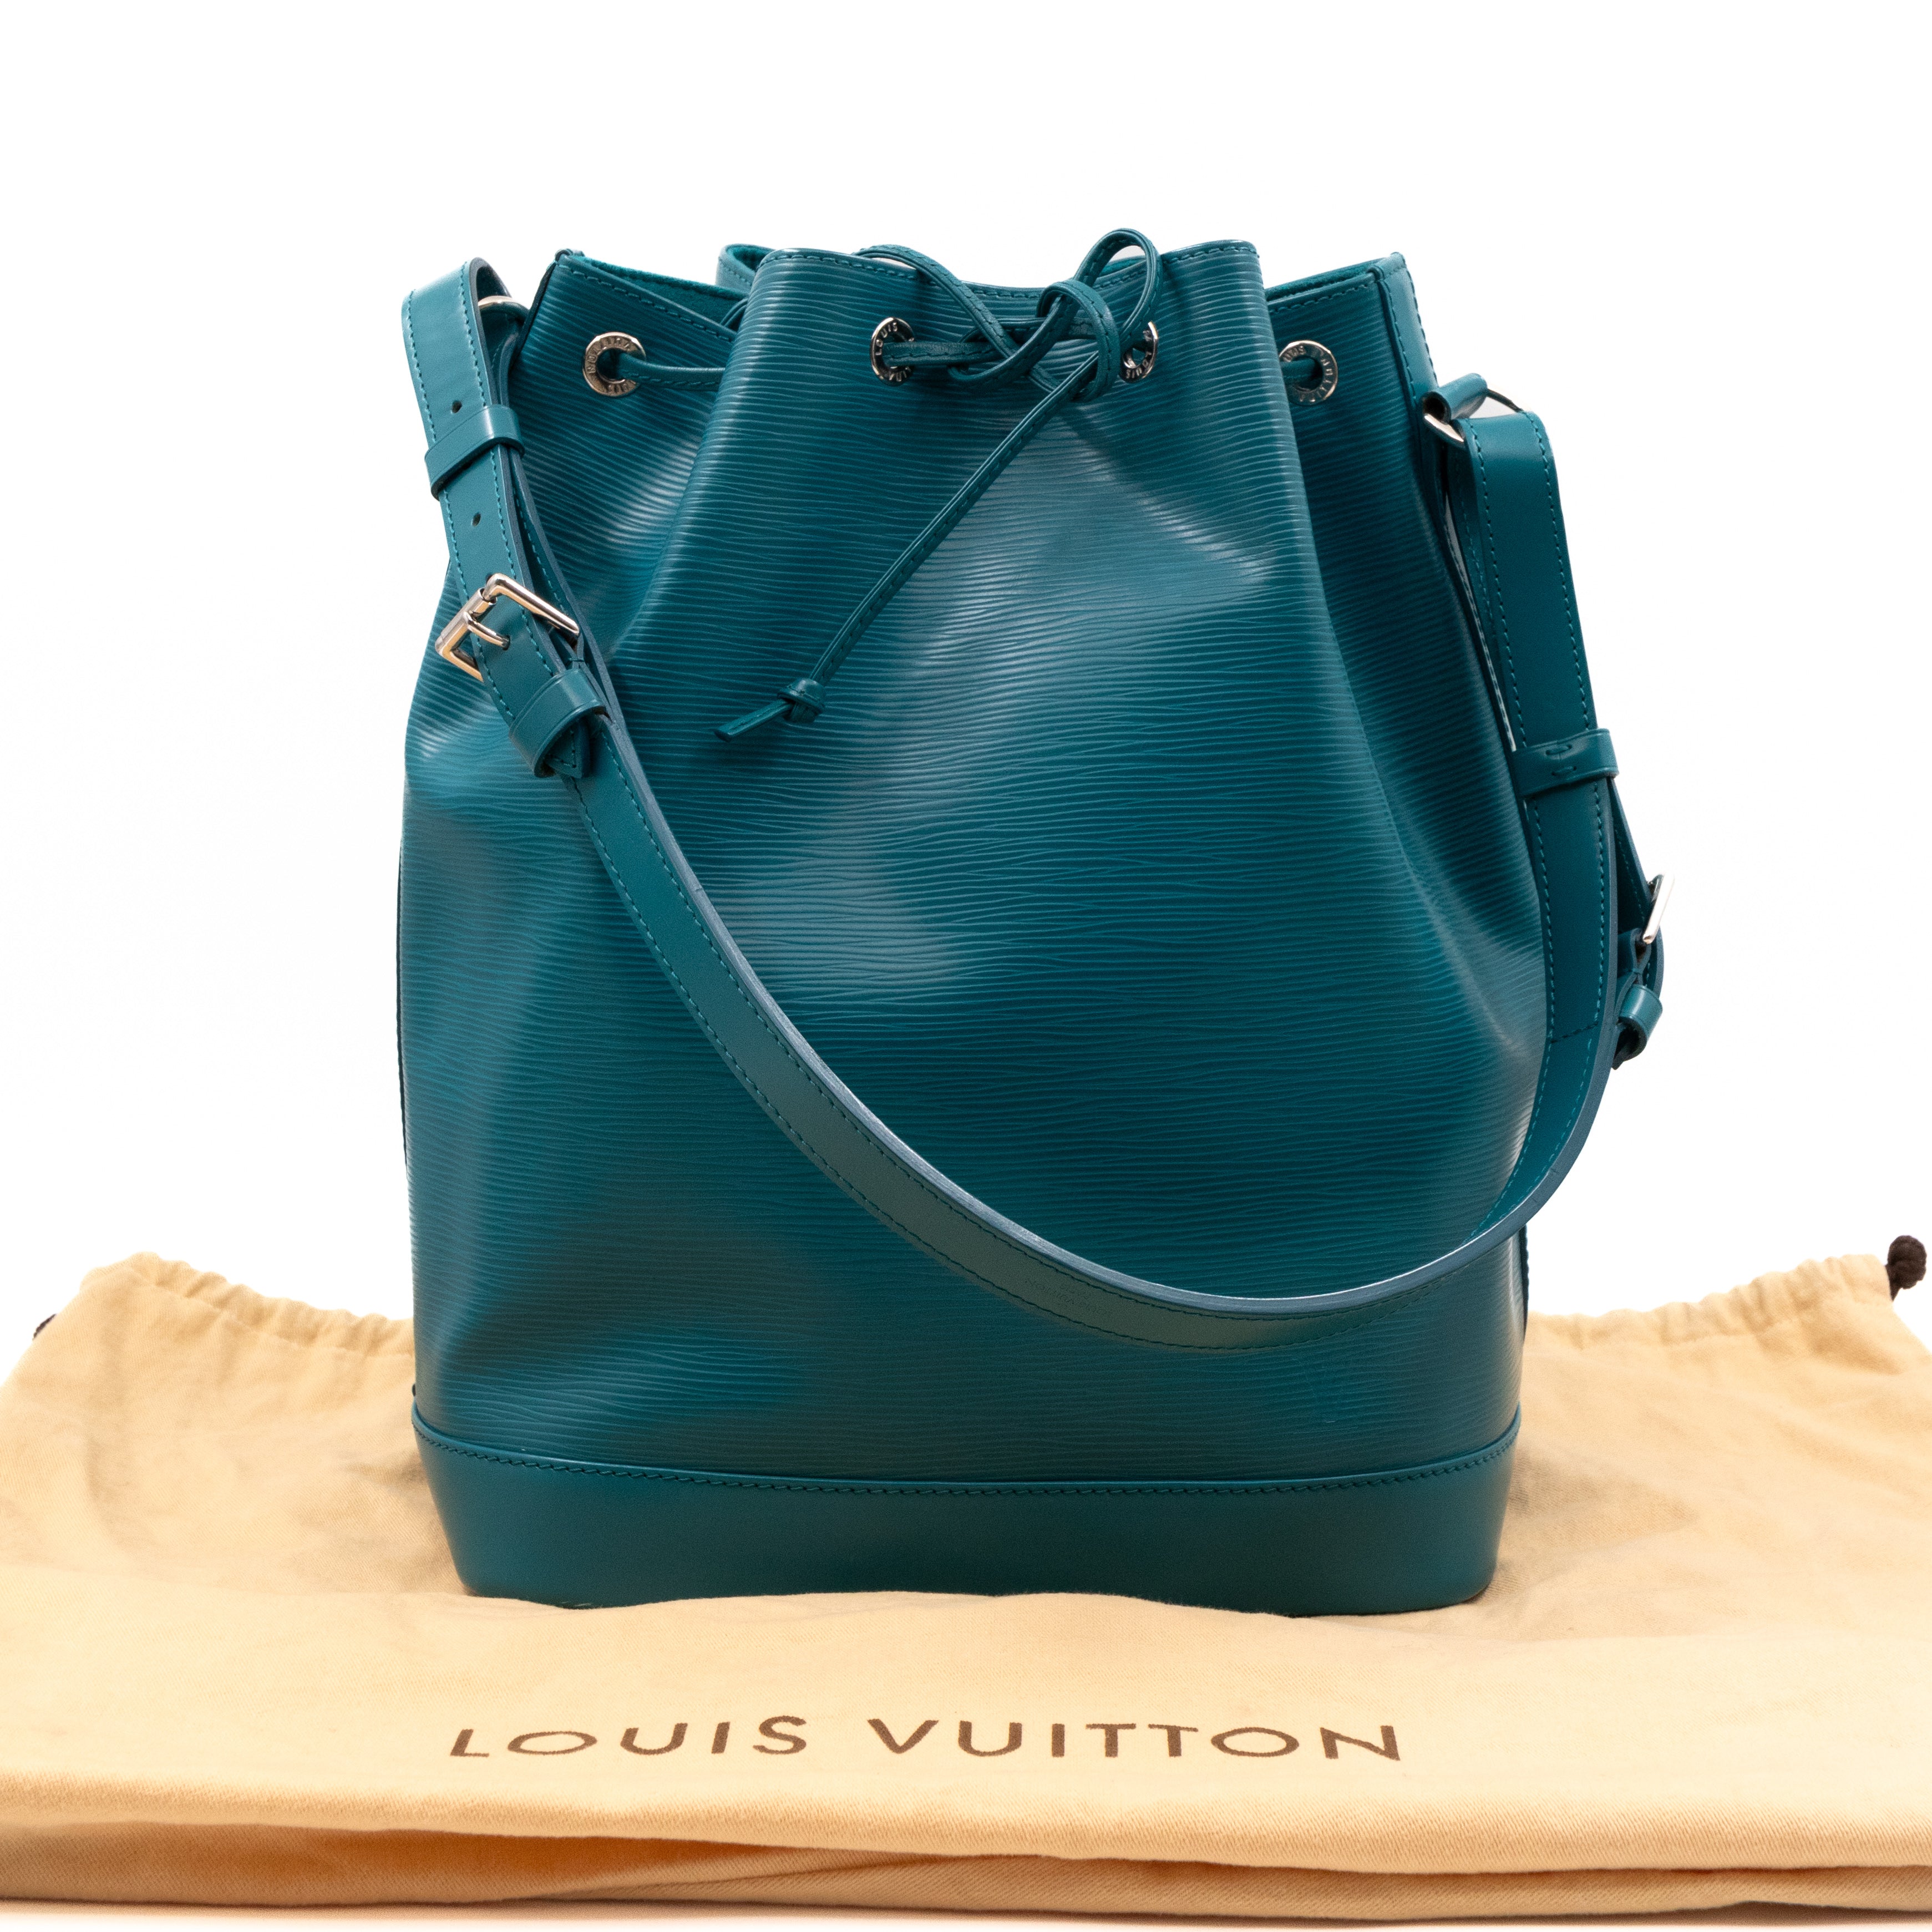 Louis Vuitton – Louis Vuitton Epi Leather Cyan – Queen Station